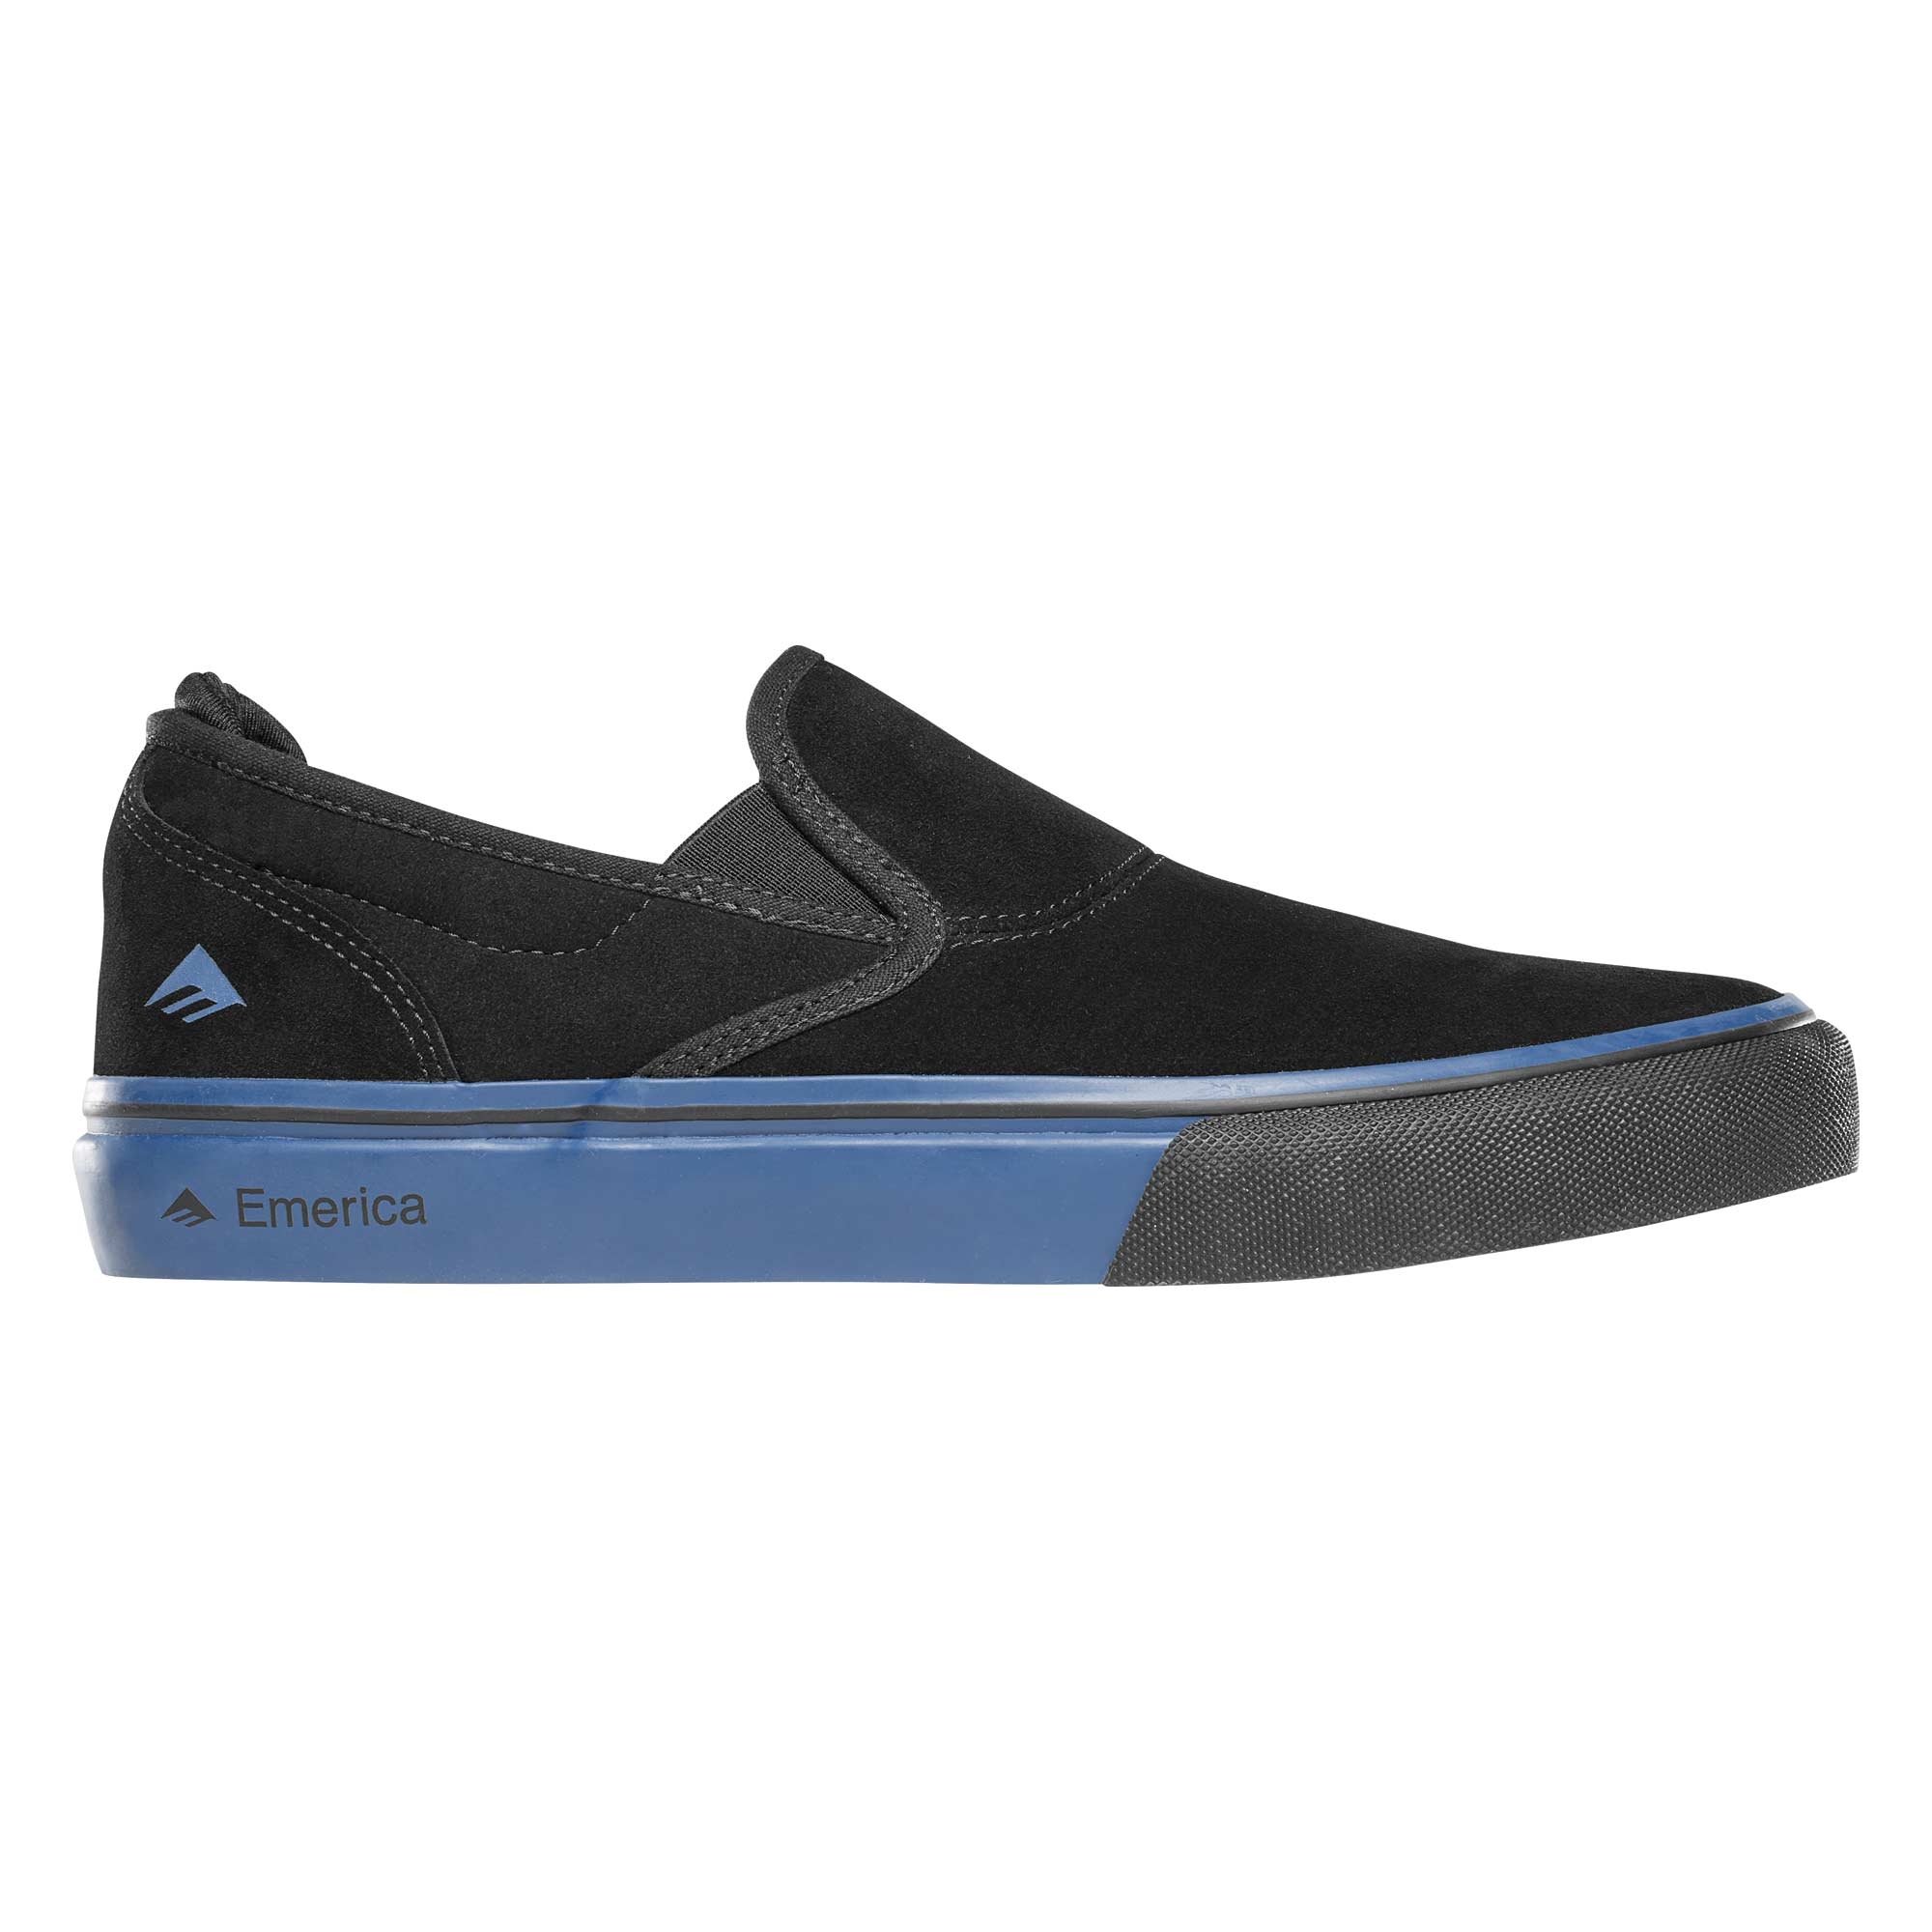 EMERICA Shoe WINO G6 SLIP-ON bla/blu/bla, black/blue/black